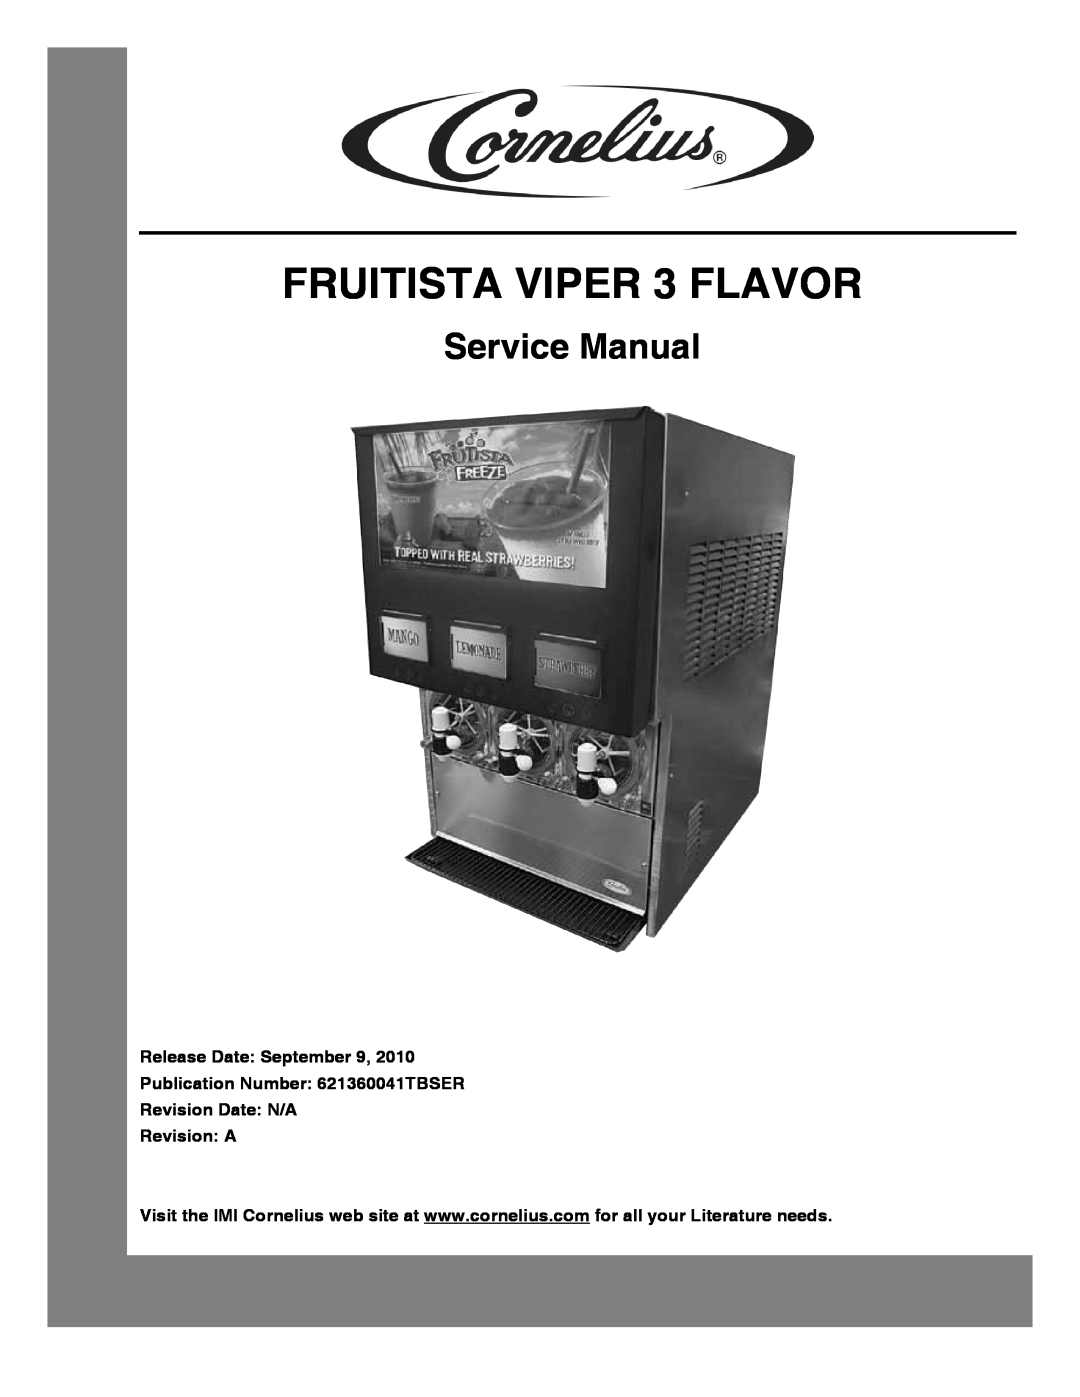 Cornelius service manual FRUITISTA VIPER 3 FLAVOR, Release Date September, Publication Number 621360041TBSER 